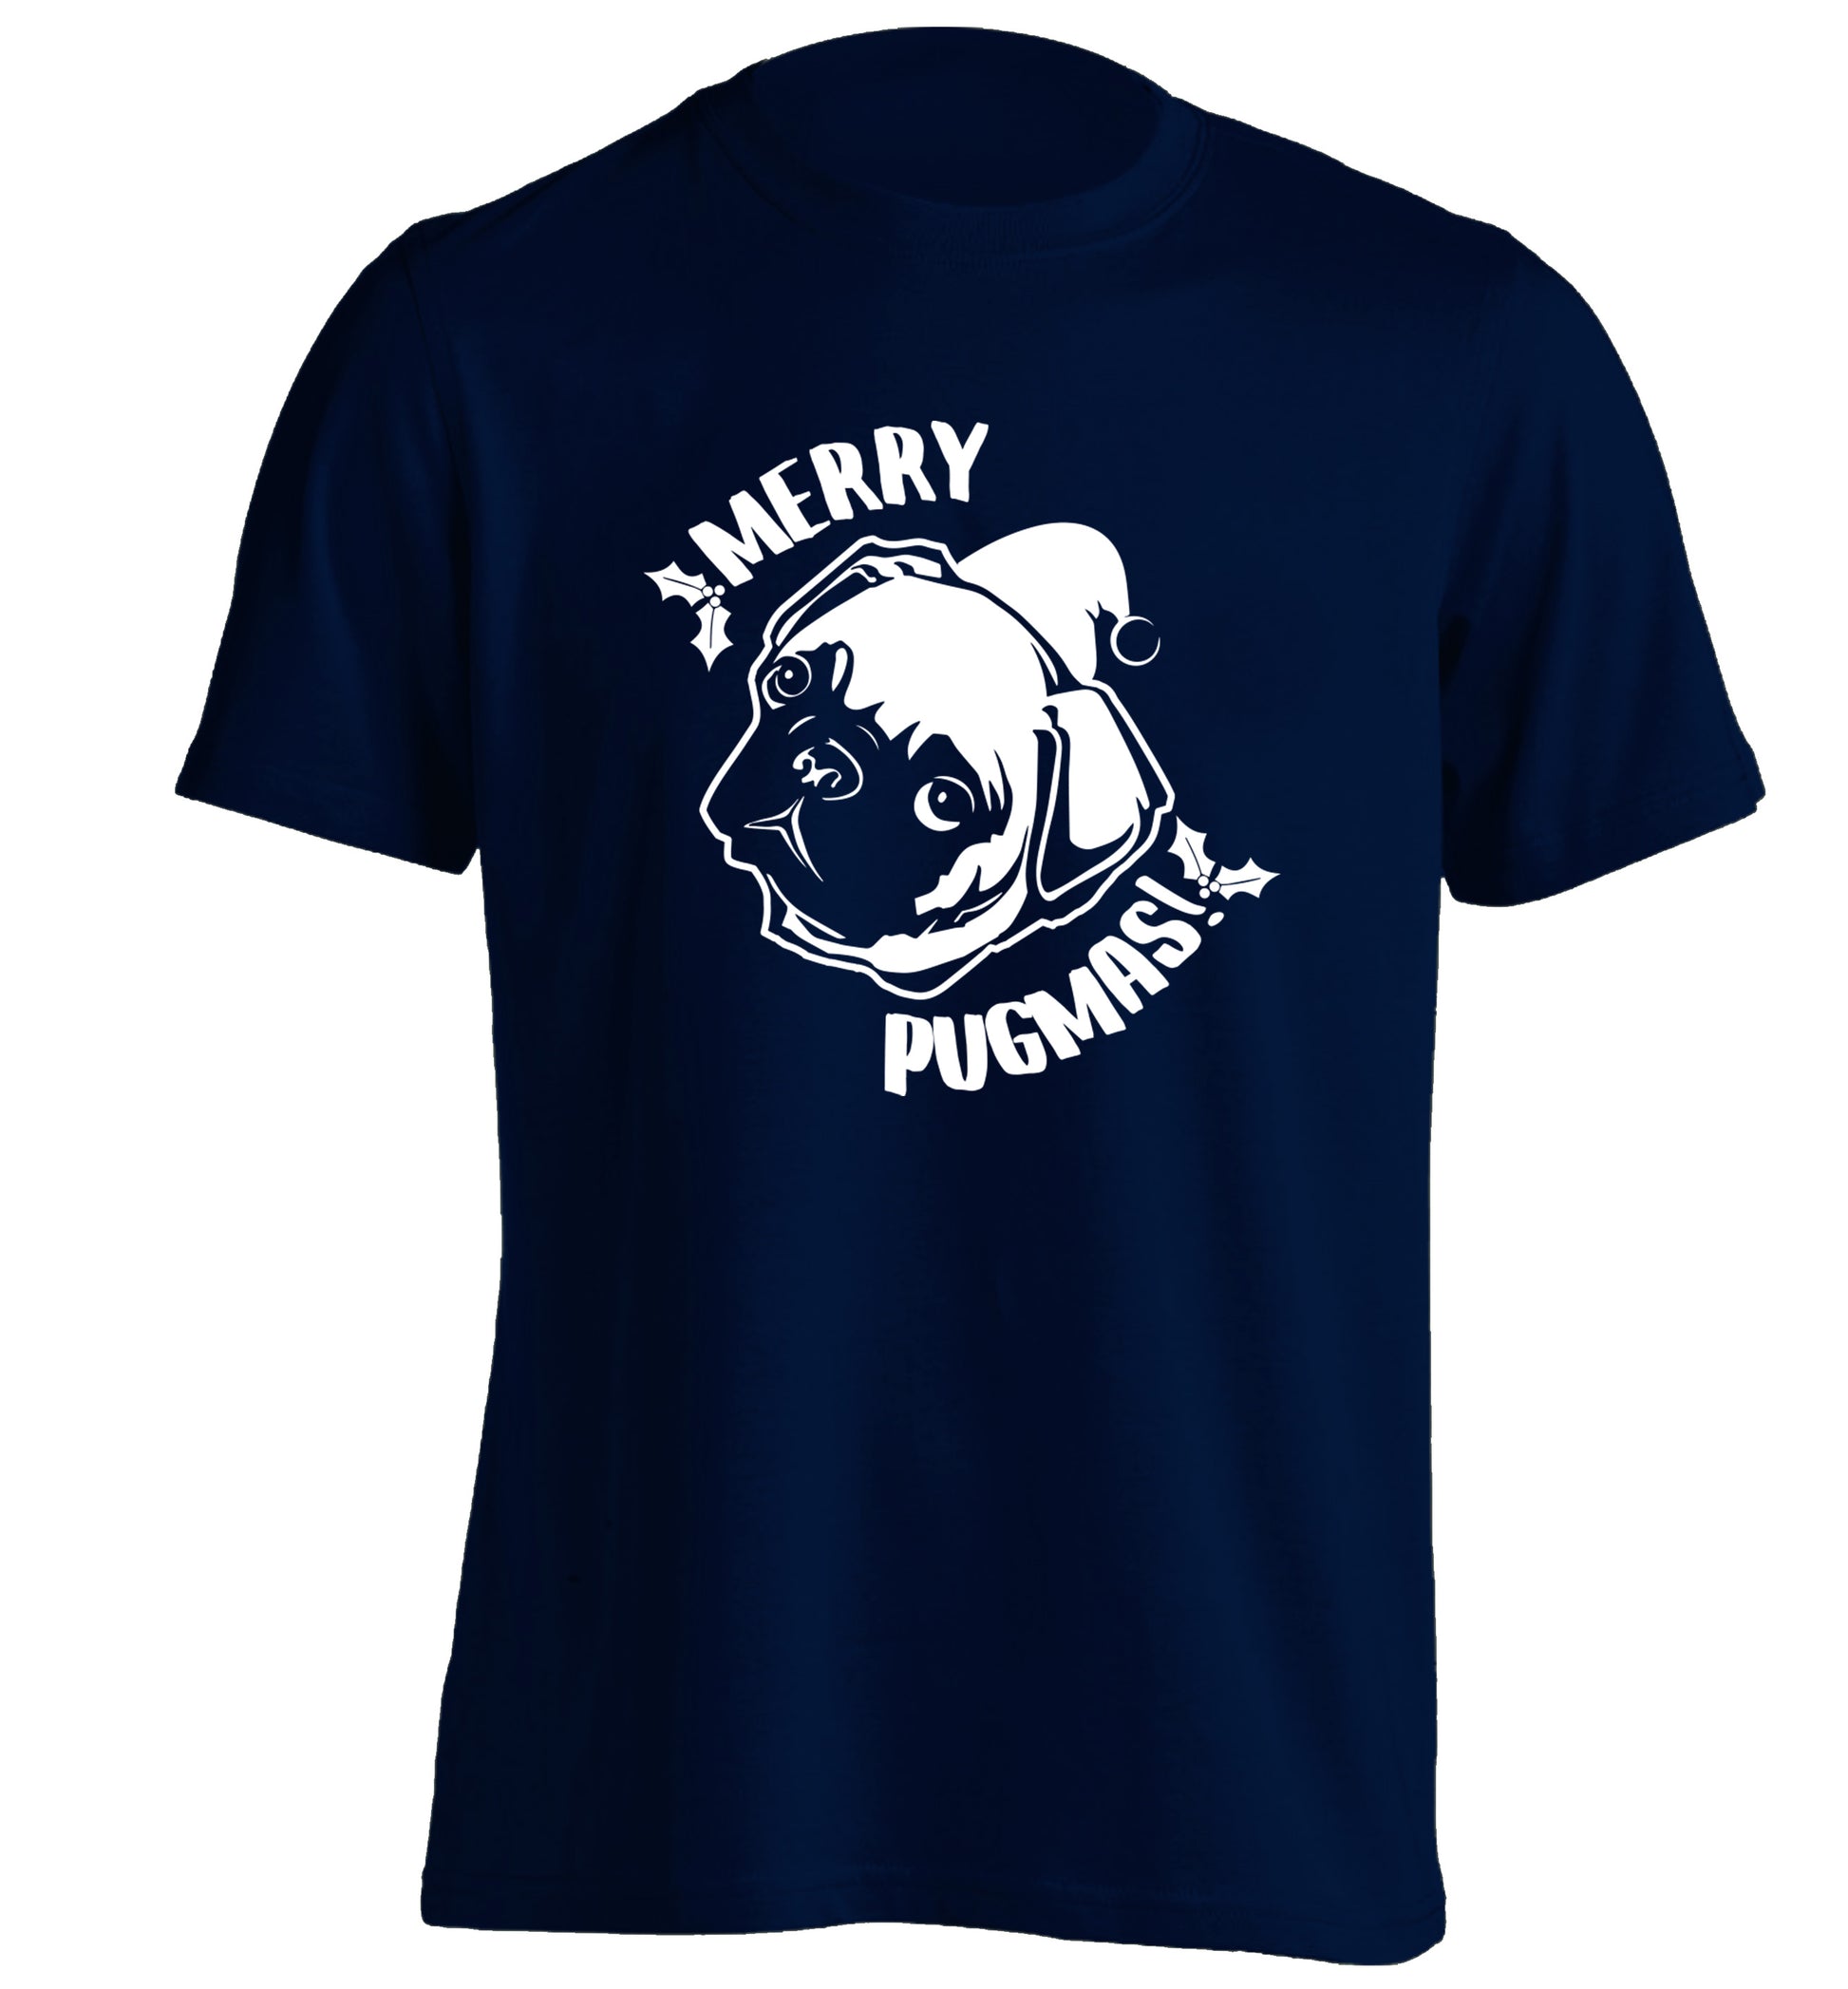 Merry Pugmas adults unisex navy Tshirt 2XL